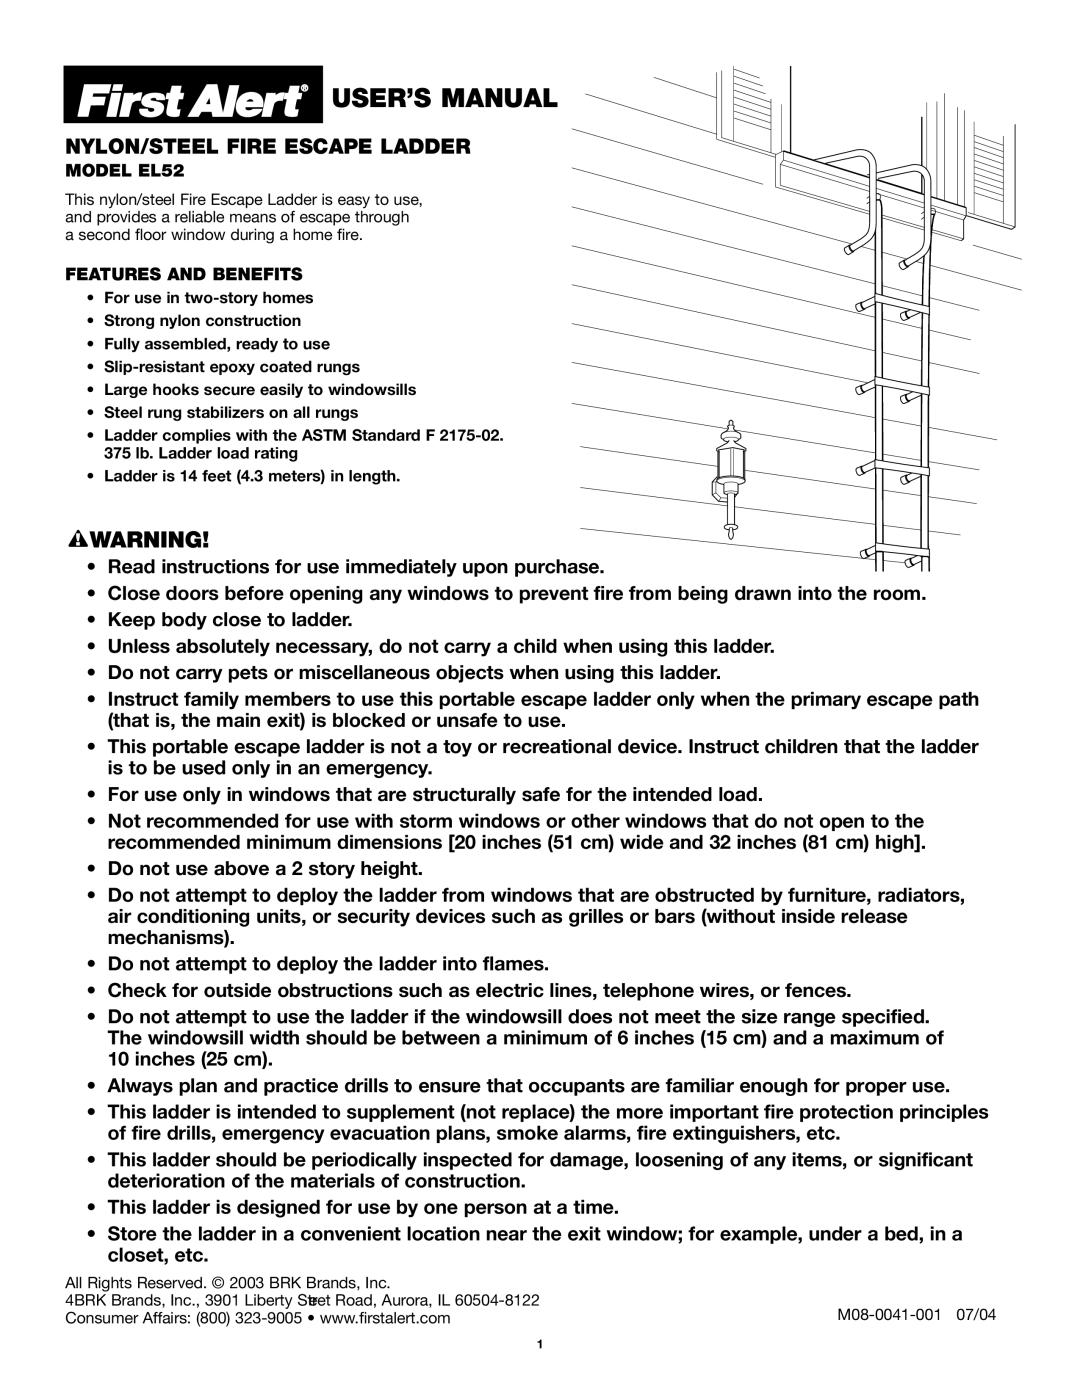 BRK electronic EL52 user manual Nylon/Steel Fire Escape Ladder 